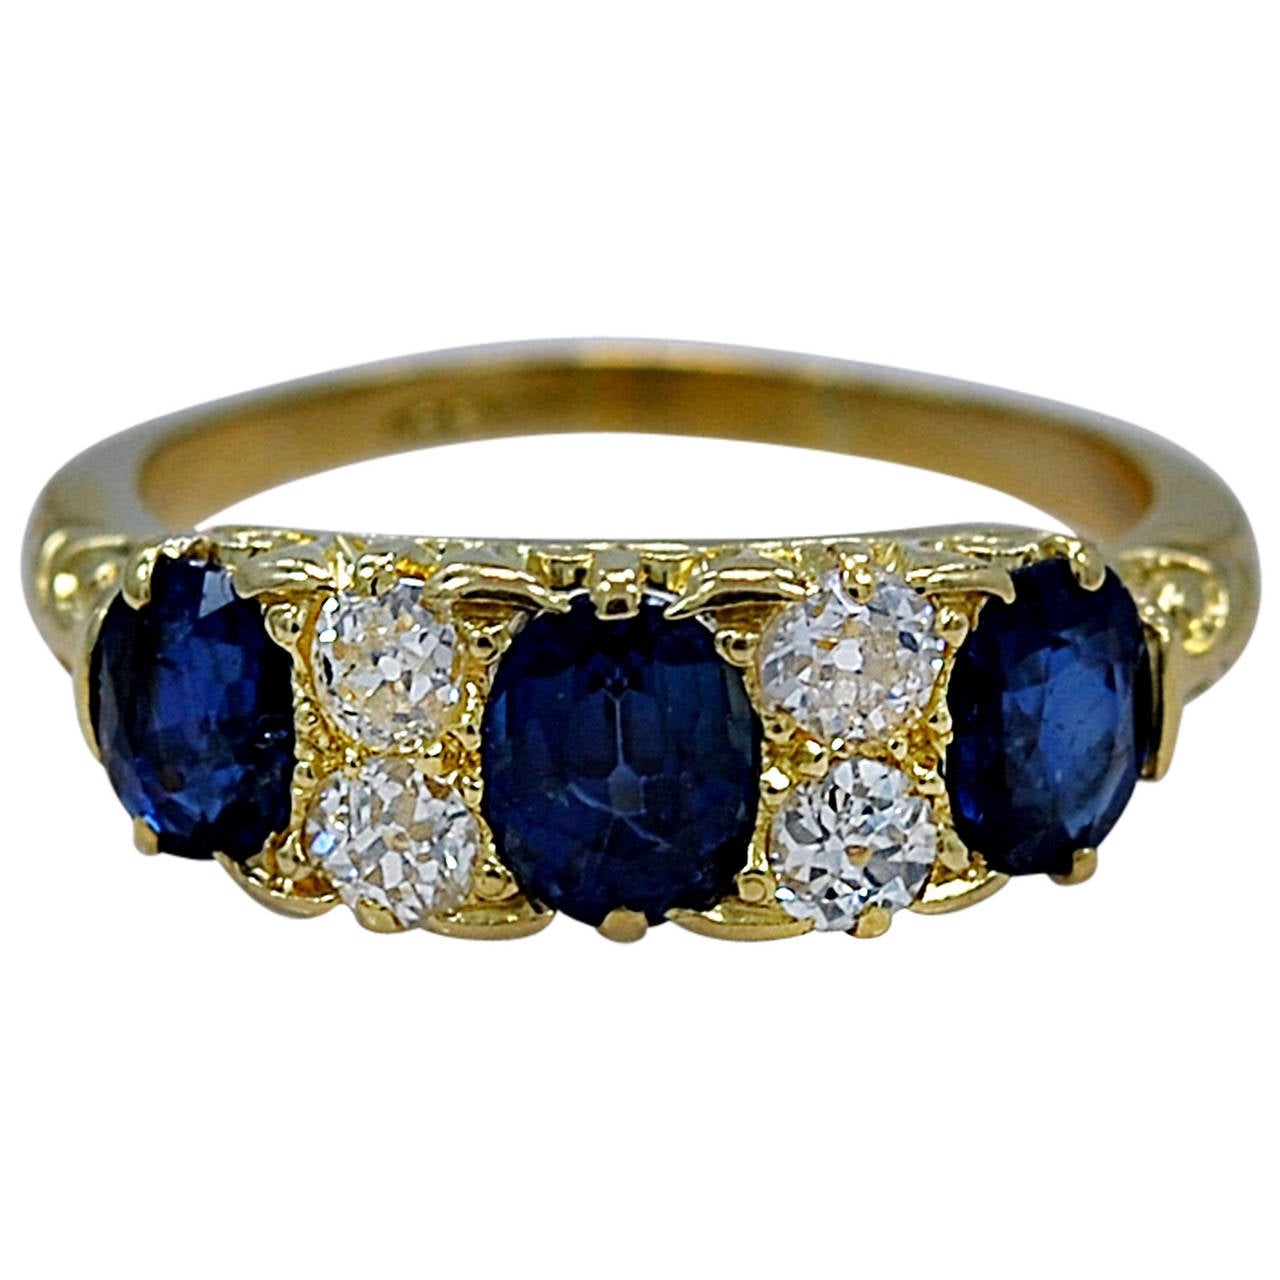 Beautiful Edwardian Natural Sapphire and .50 Carat Diamond Band Ring